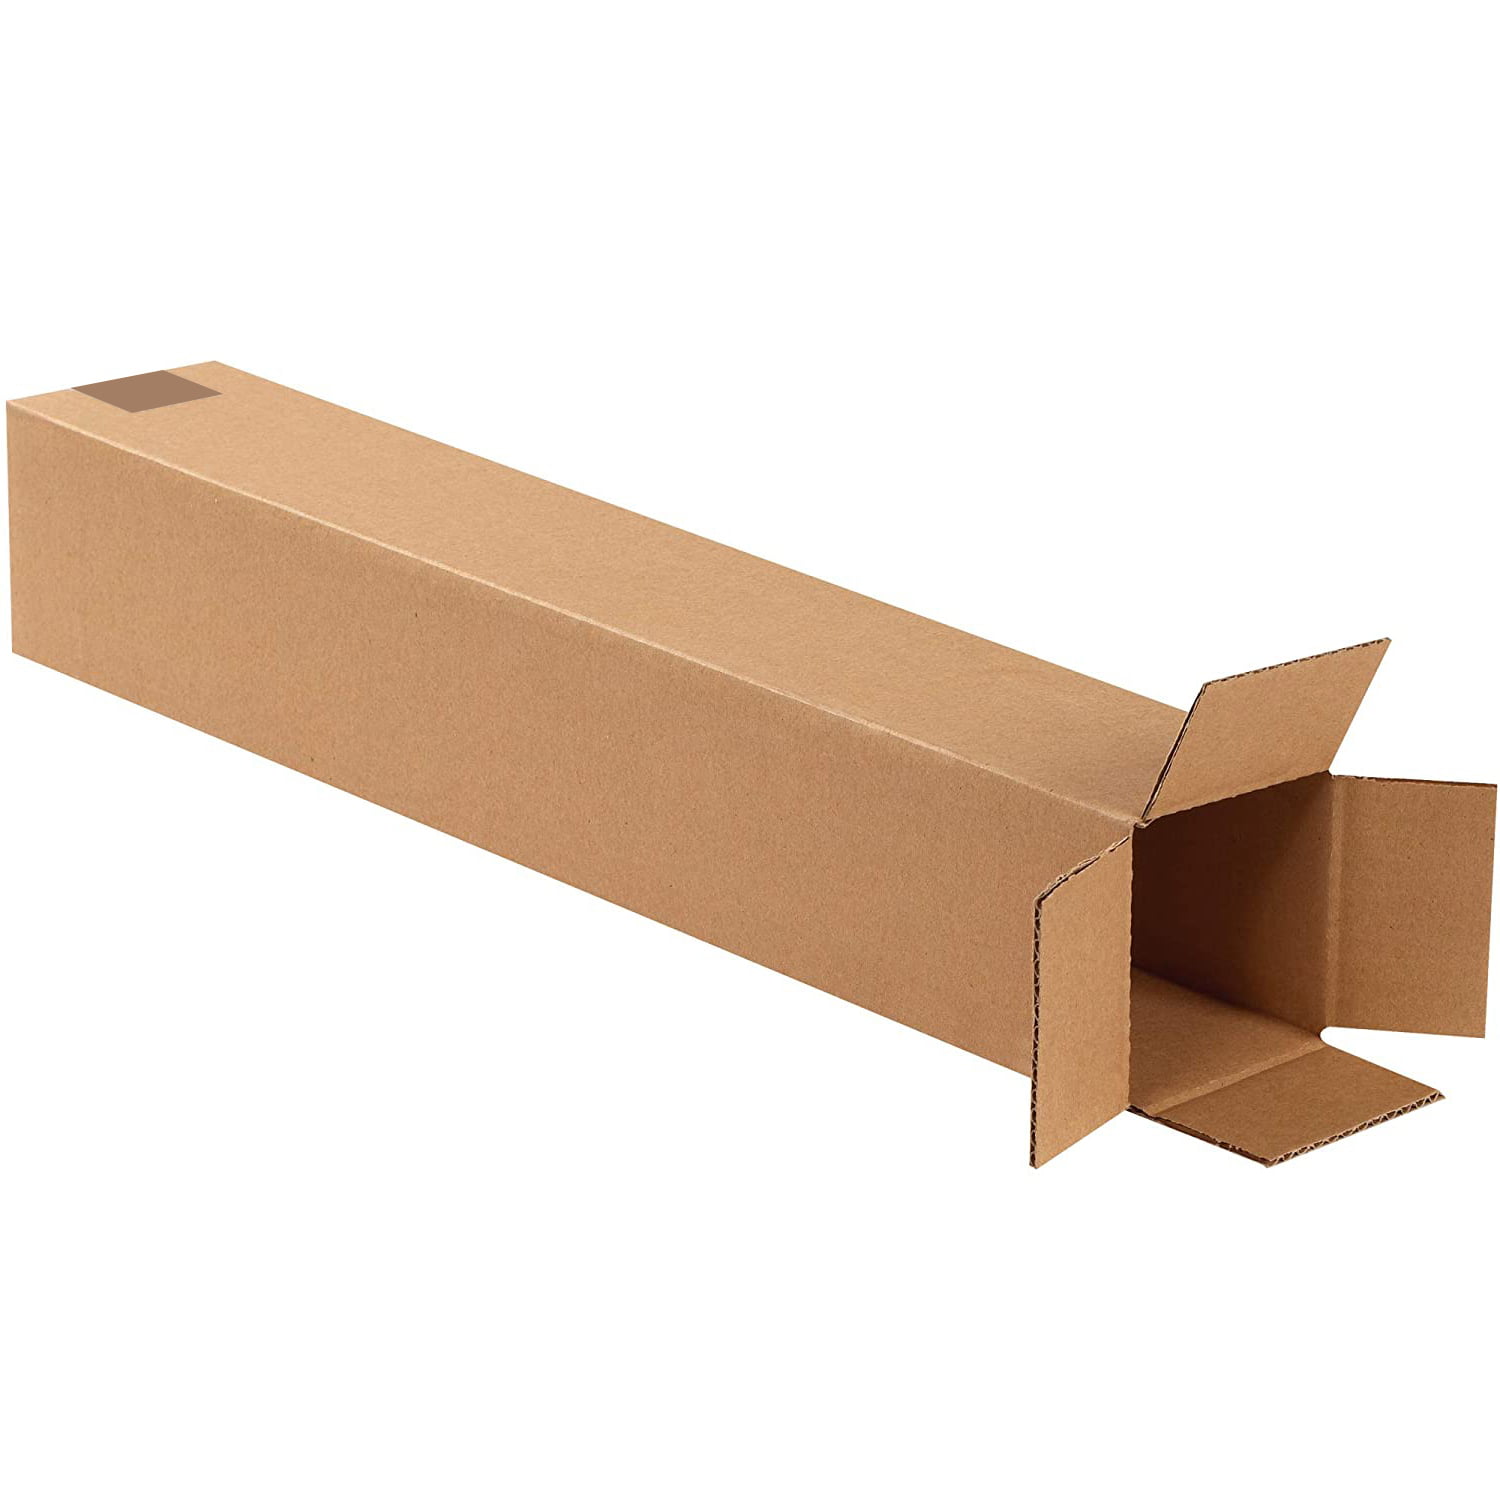 24x4x4 Box - Tall Corrugated Cardboard Boxes - Bundle of 30 Tall Tube